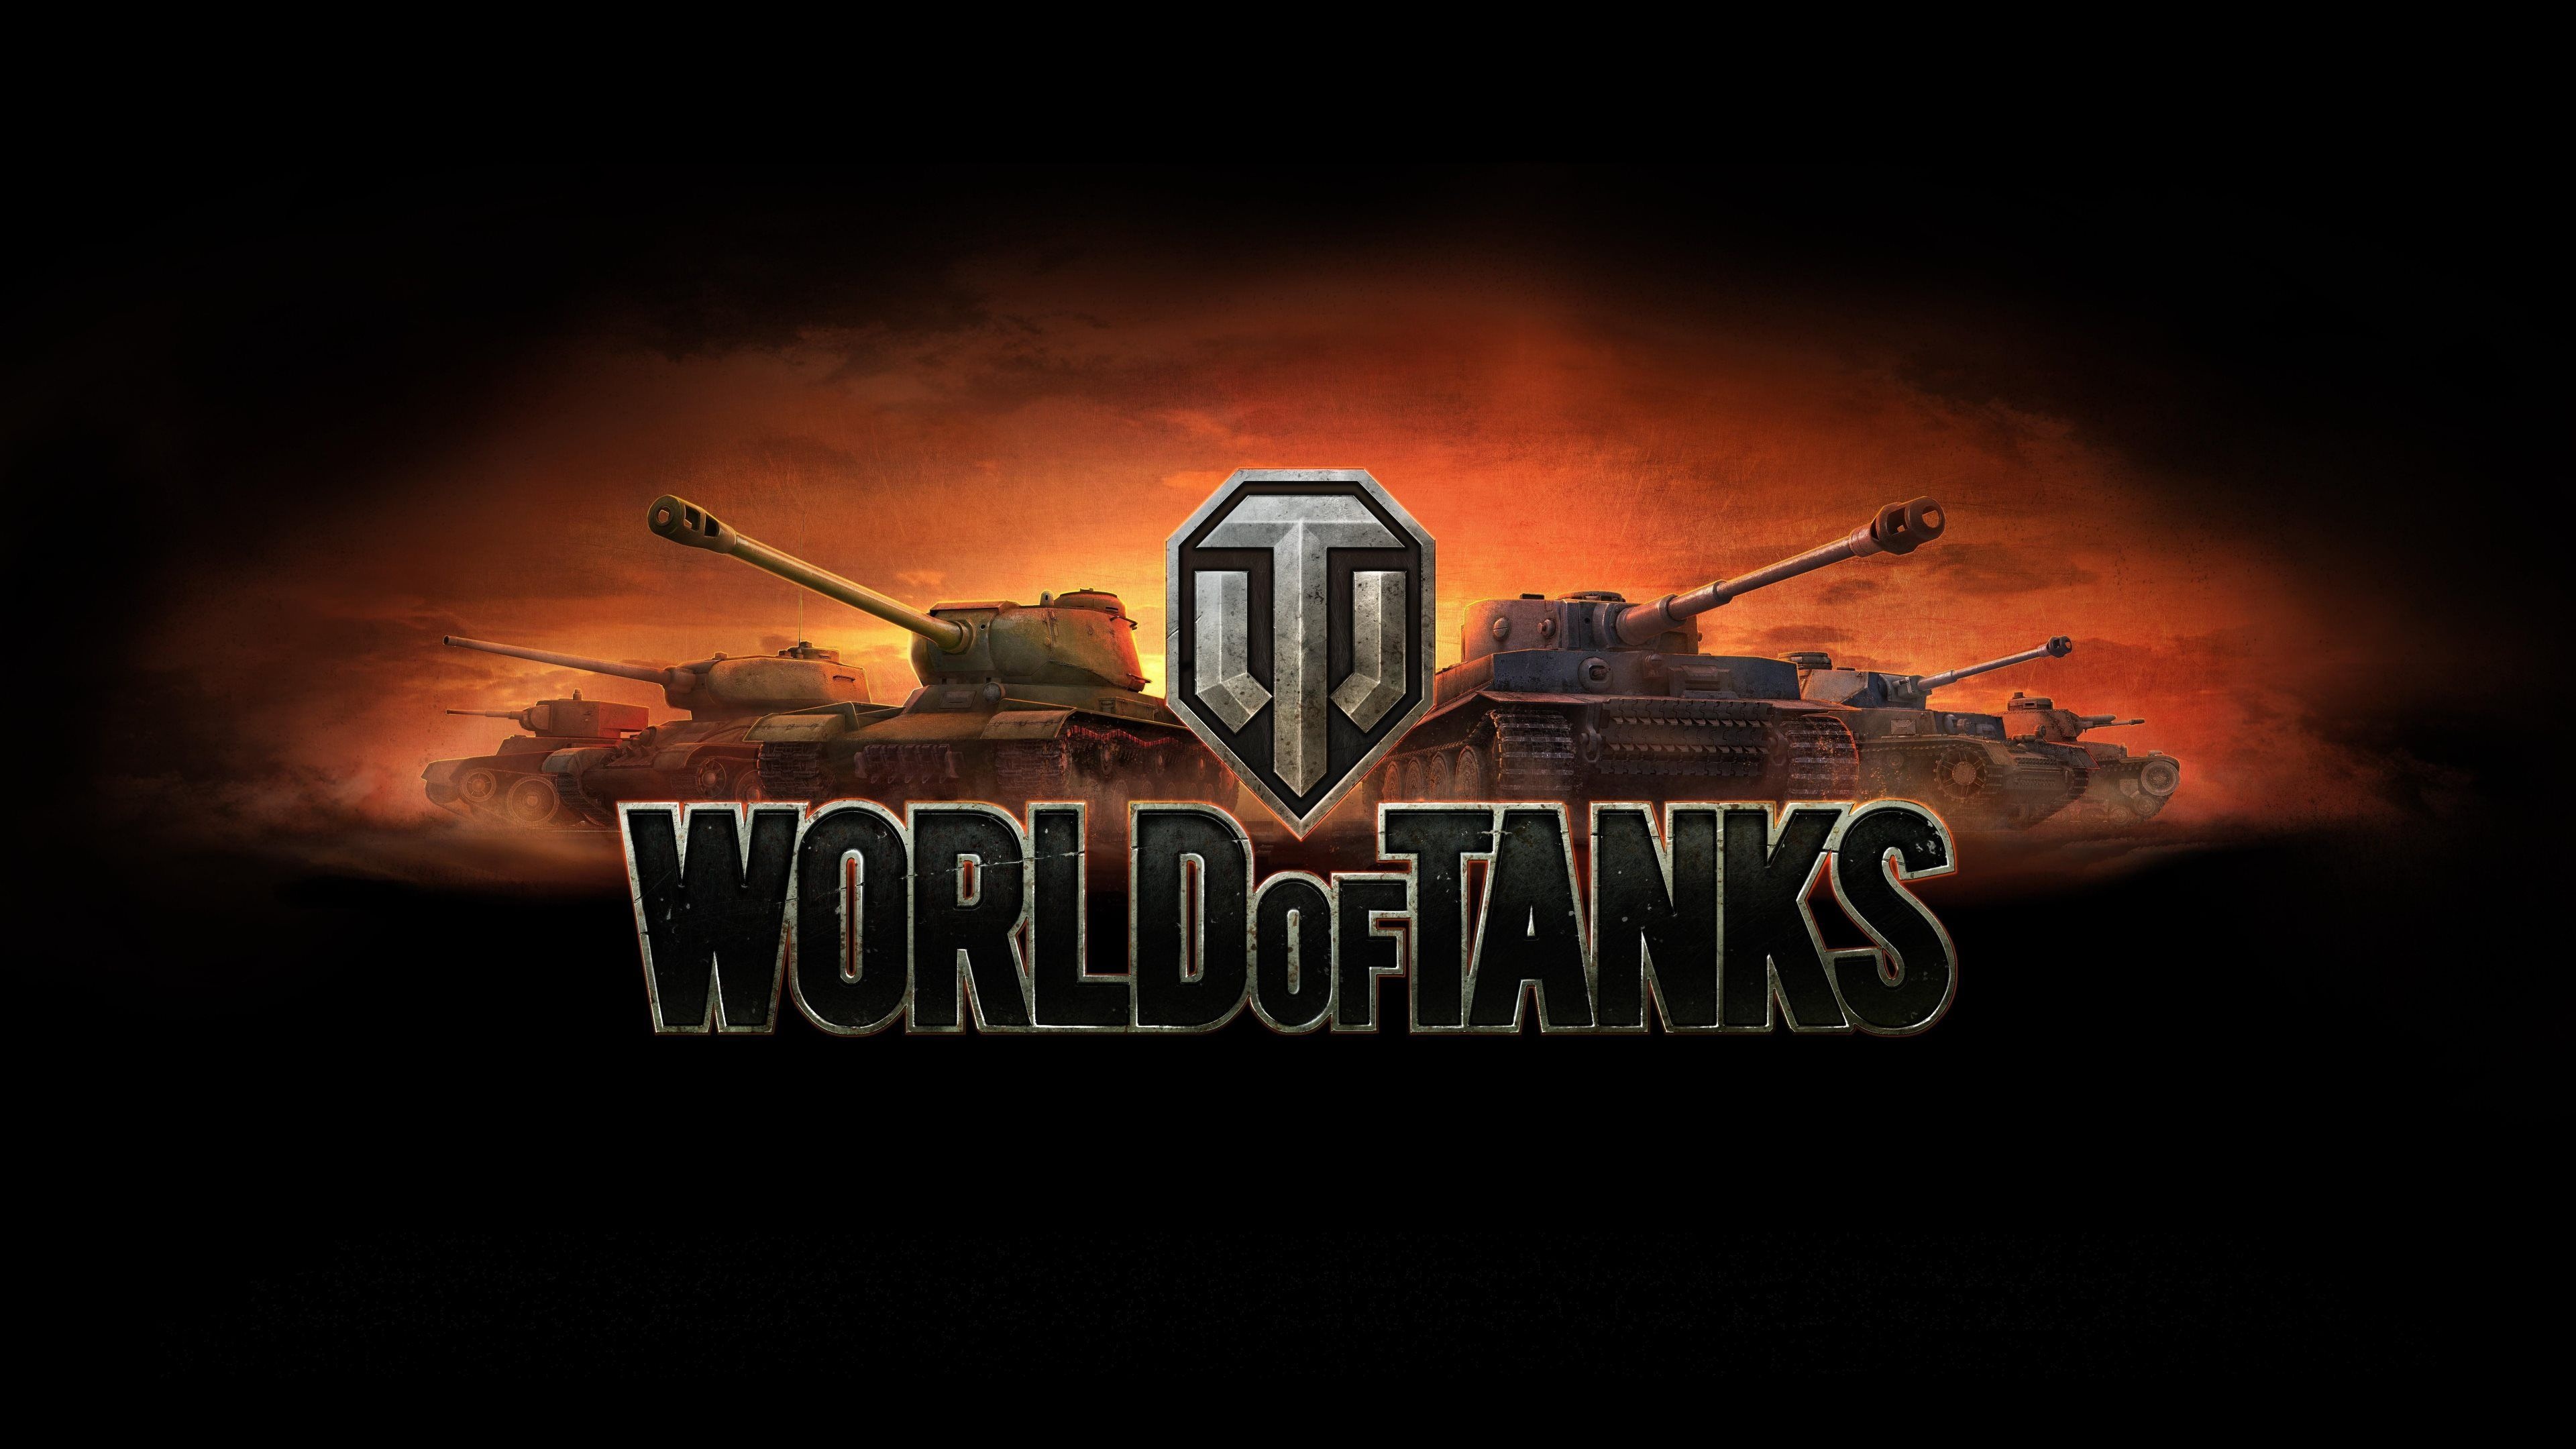 World of Tanks, Logo wallpapers, Top free, Logo backgrounds, 3840x2160 4K Desktop